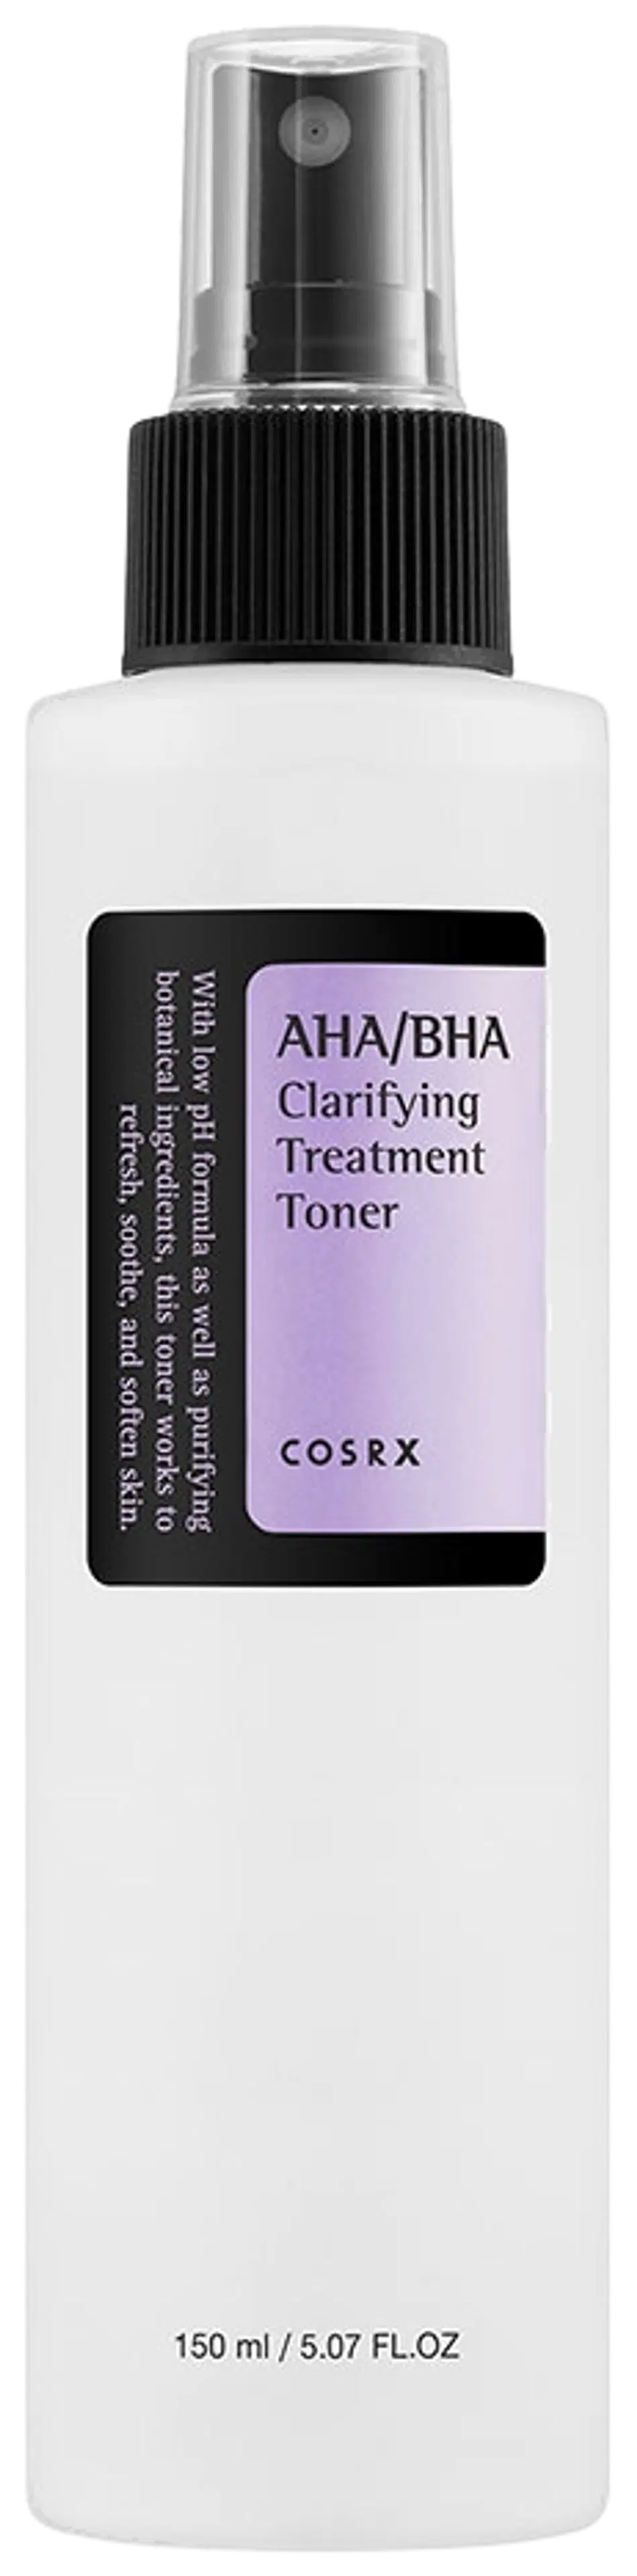 COSRX AHA/BHA Clarifying Treatment Toner kasvovesi 150 ml